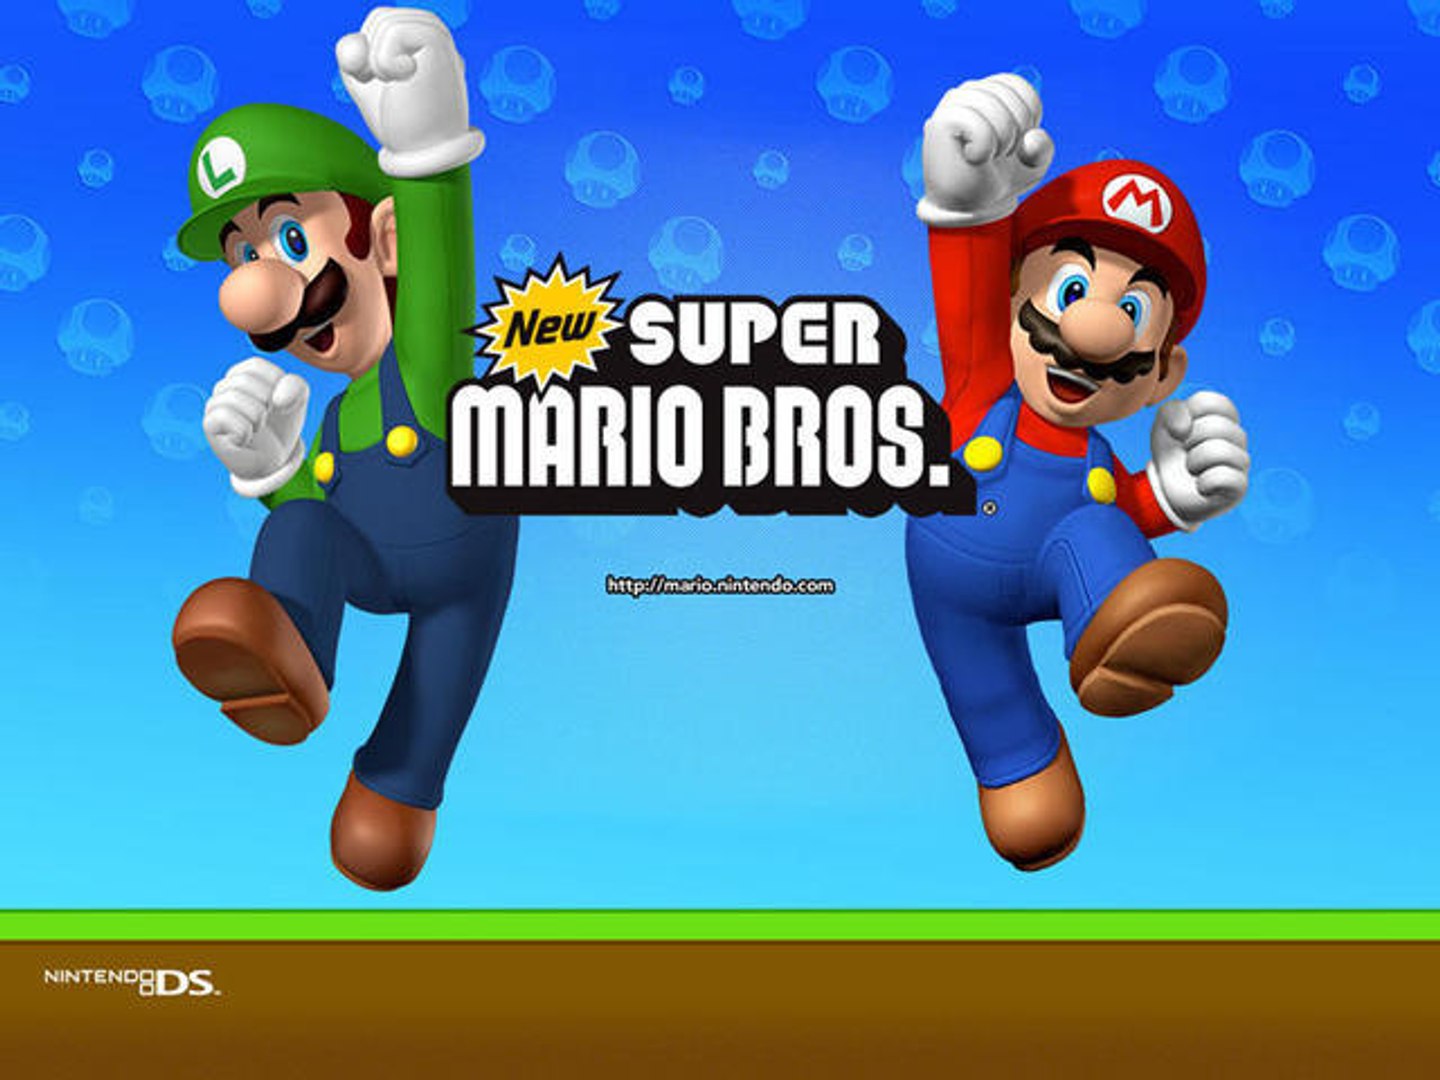 Mario new life. Super Mario игра. New super Mario Bros. Игра. Марио БРОС 1983. Новый Марио.